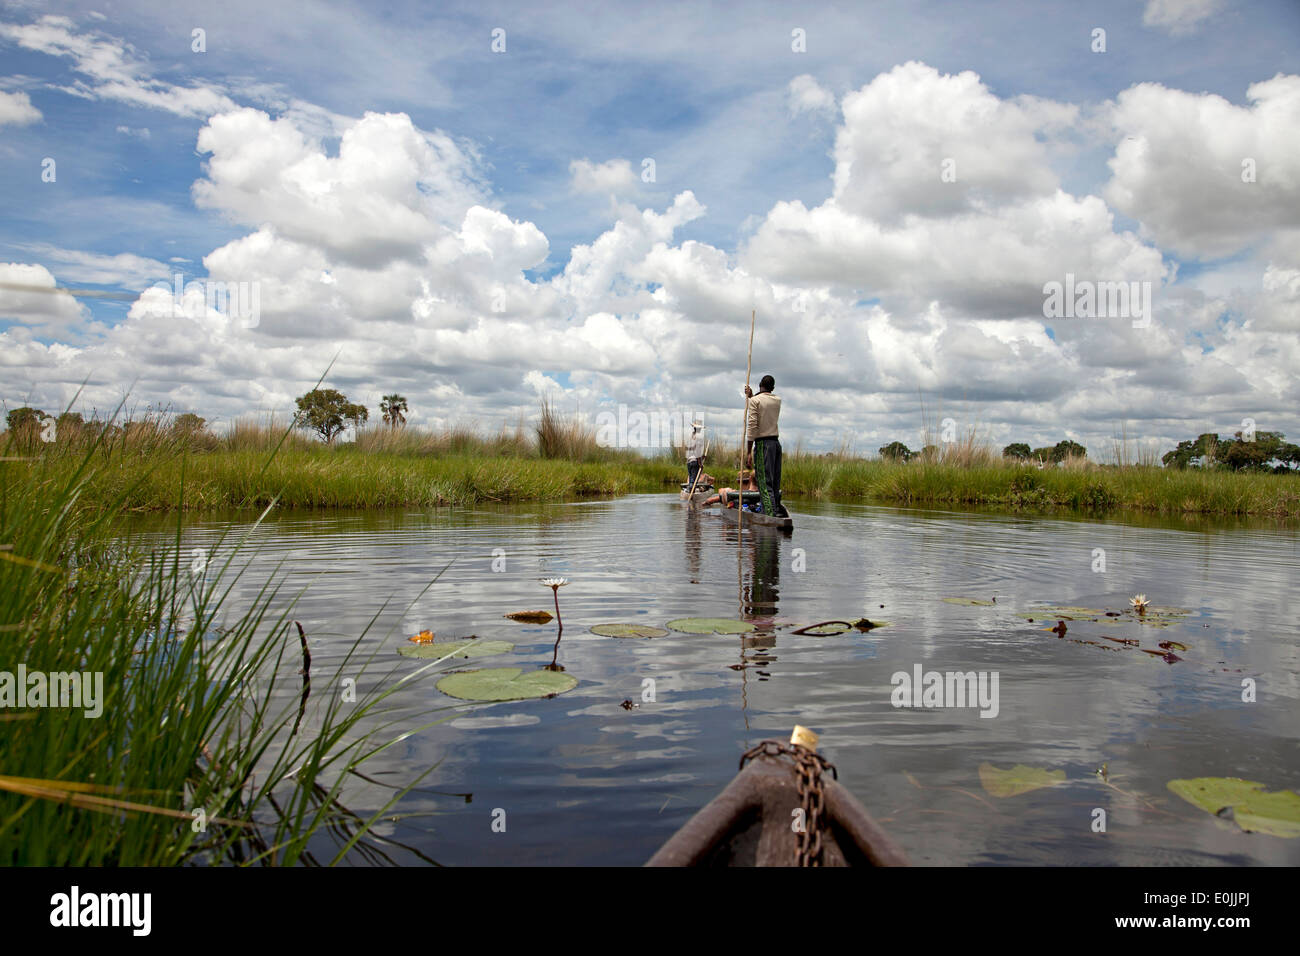 tourists on a traditional mokoro boat in the Okavango Delta, Botswana, Africa Stock Photo